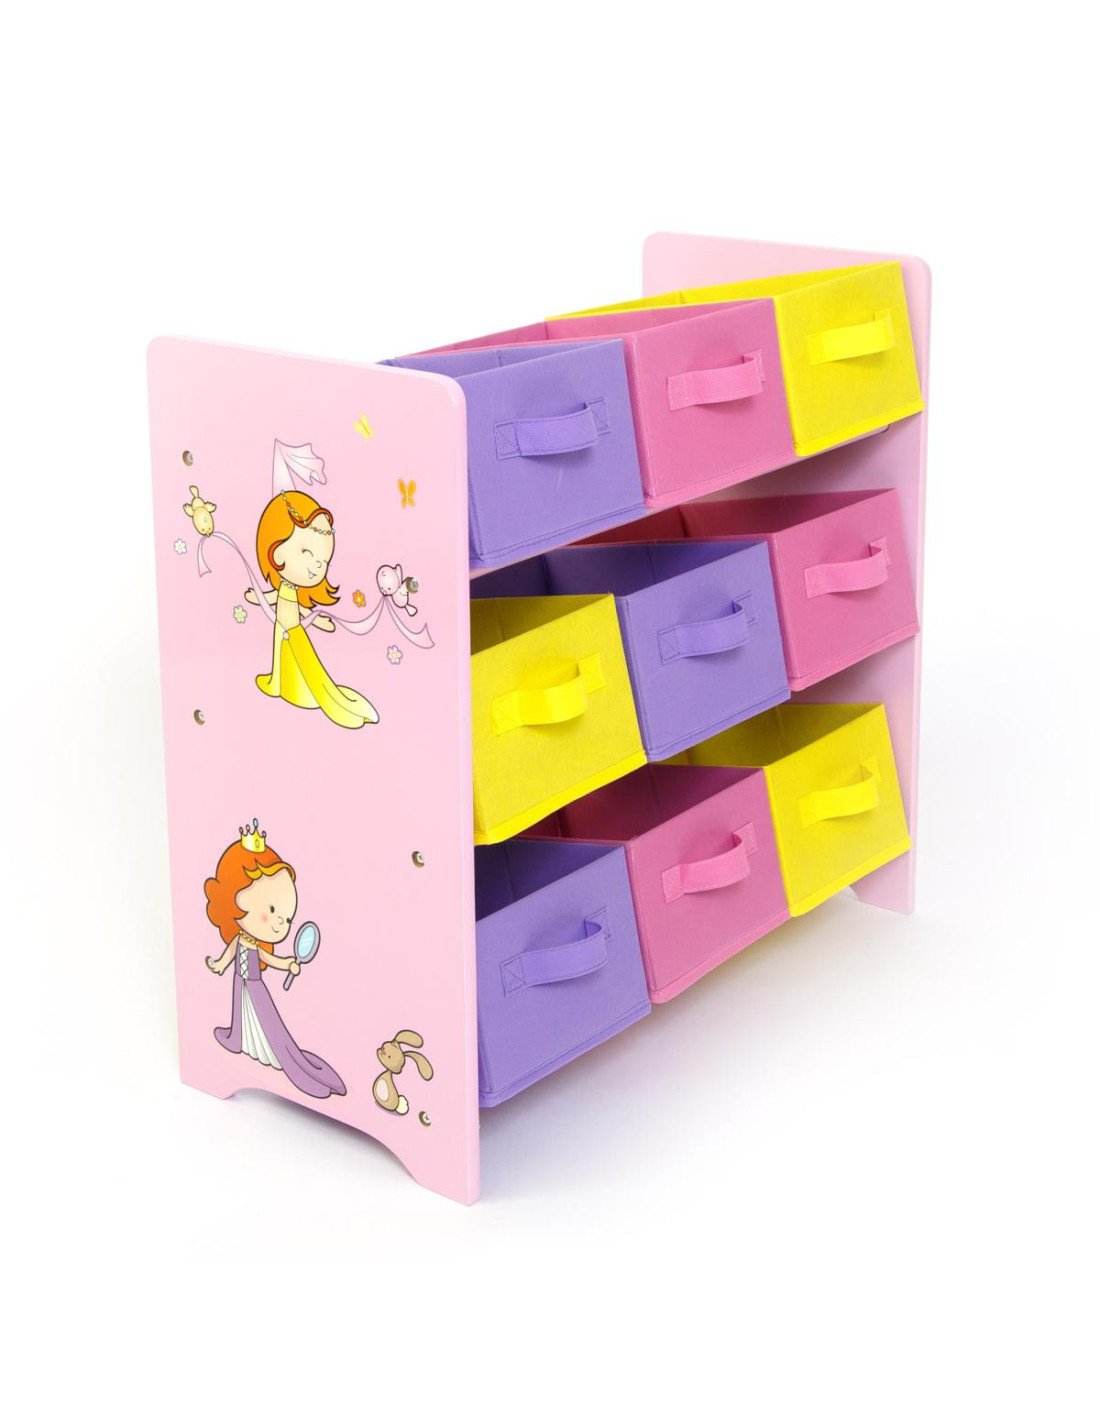 Meuble rangement jouets 9 boites tissu tiroir amovible - Ciel & terre